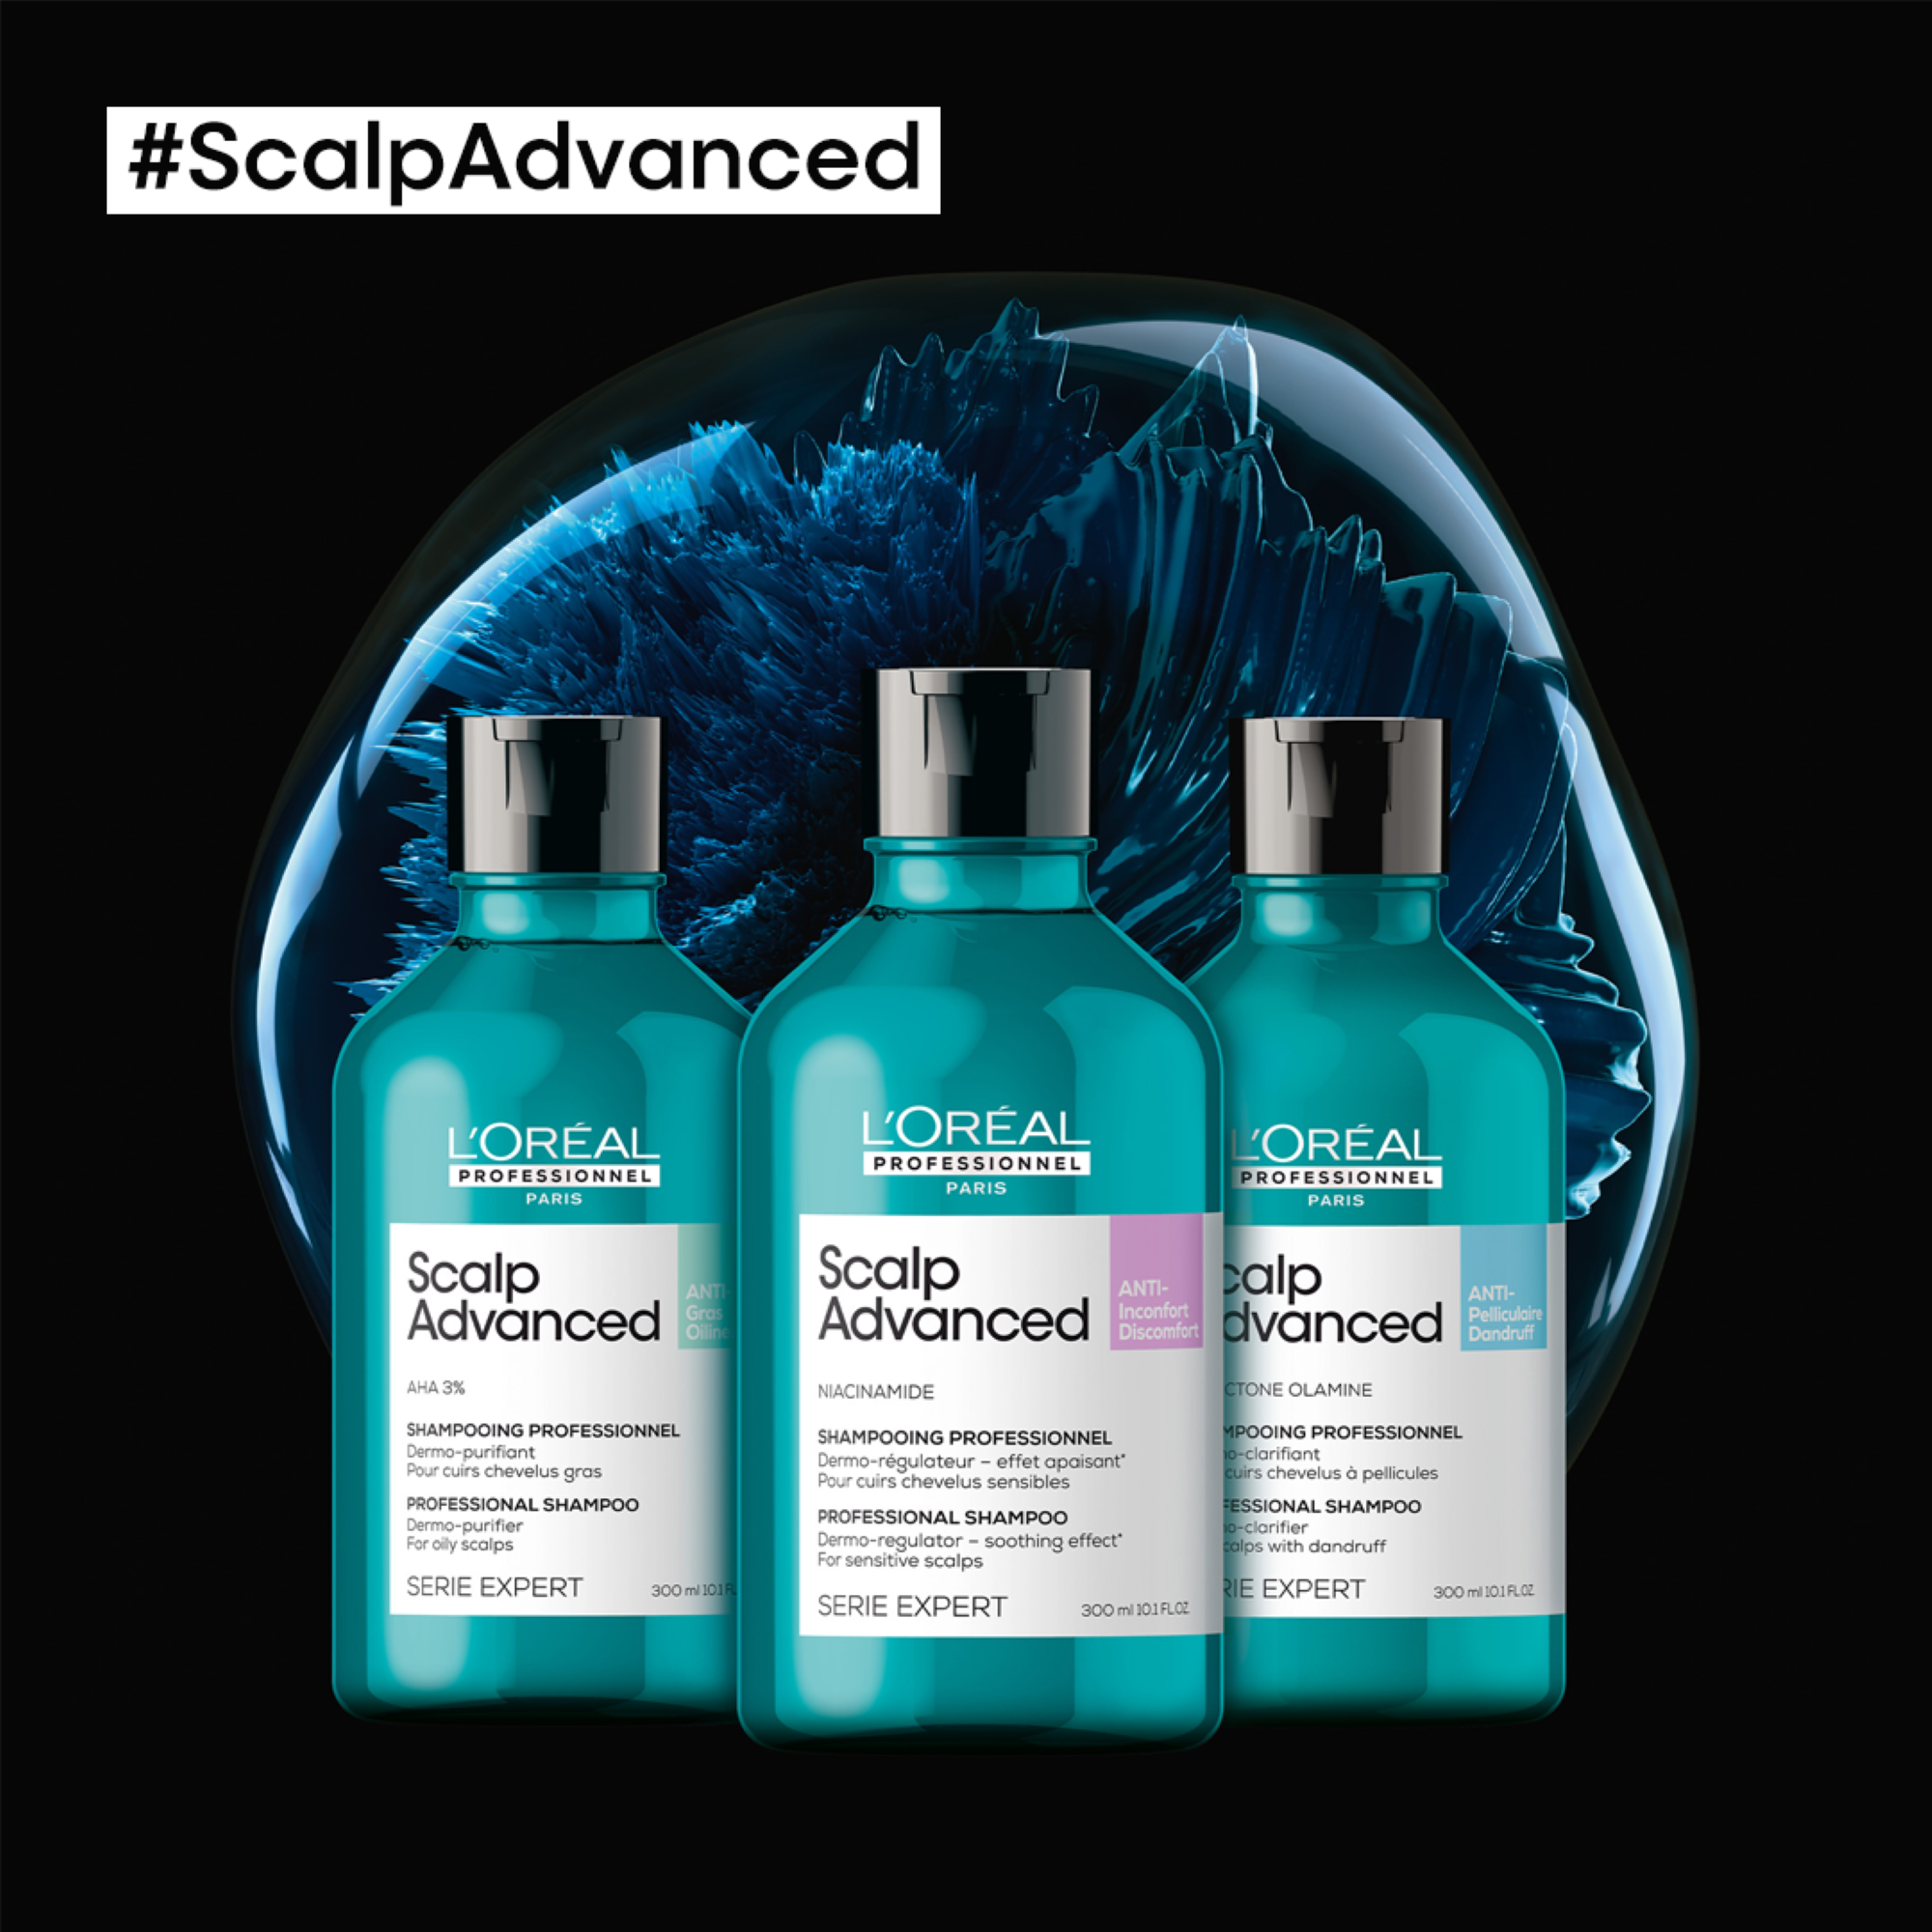 L'Oréal Professionnel Scalp Advanced Dandruff Shampoo 300ml